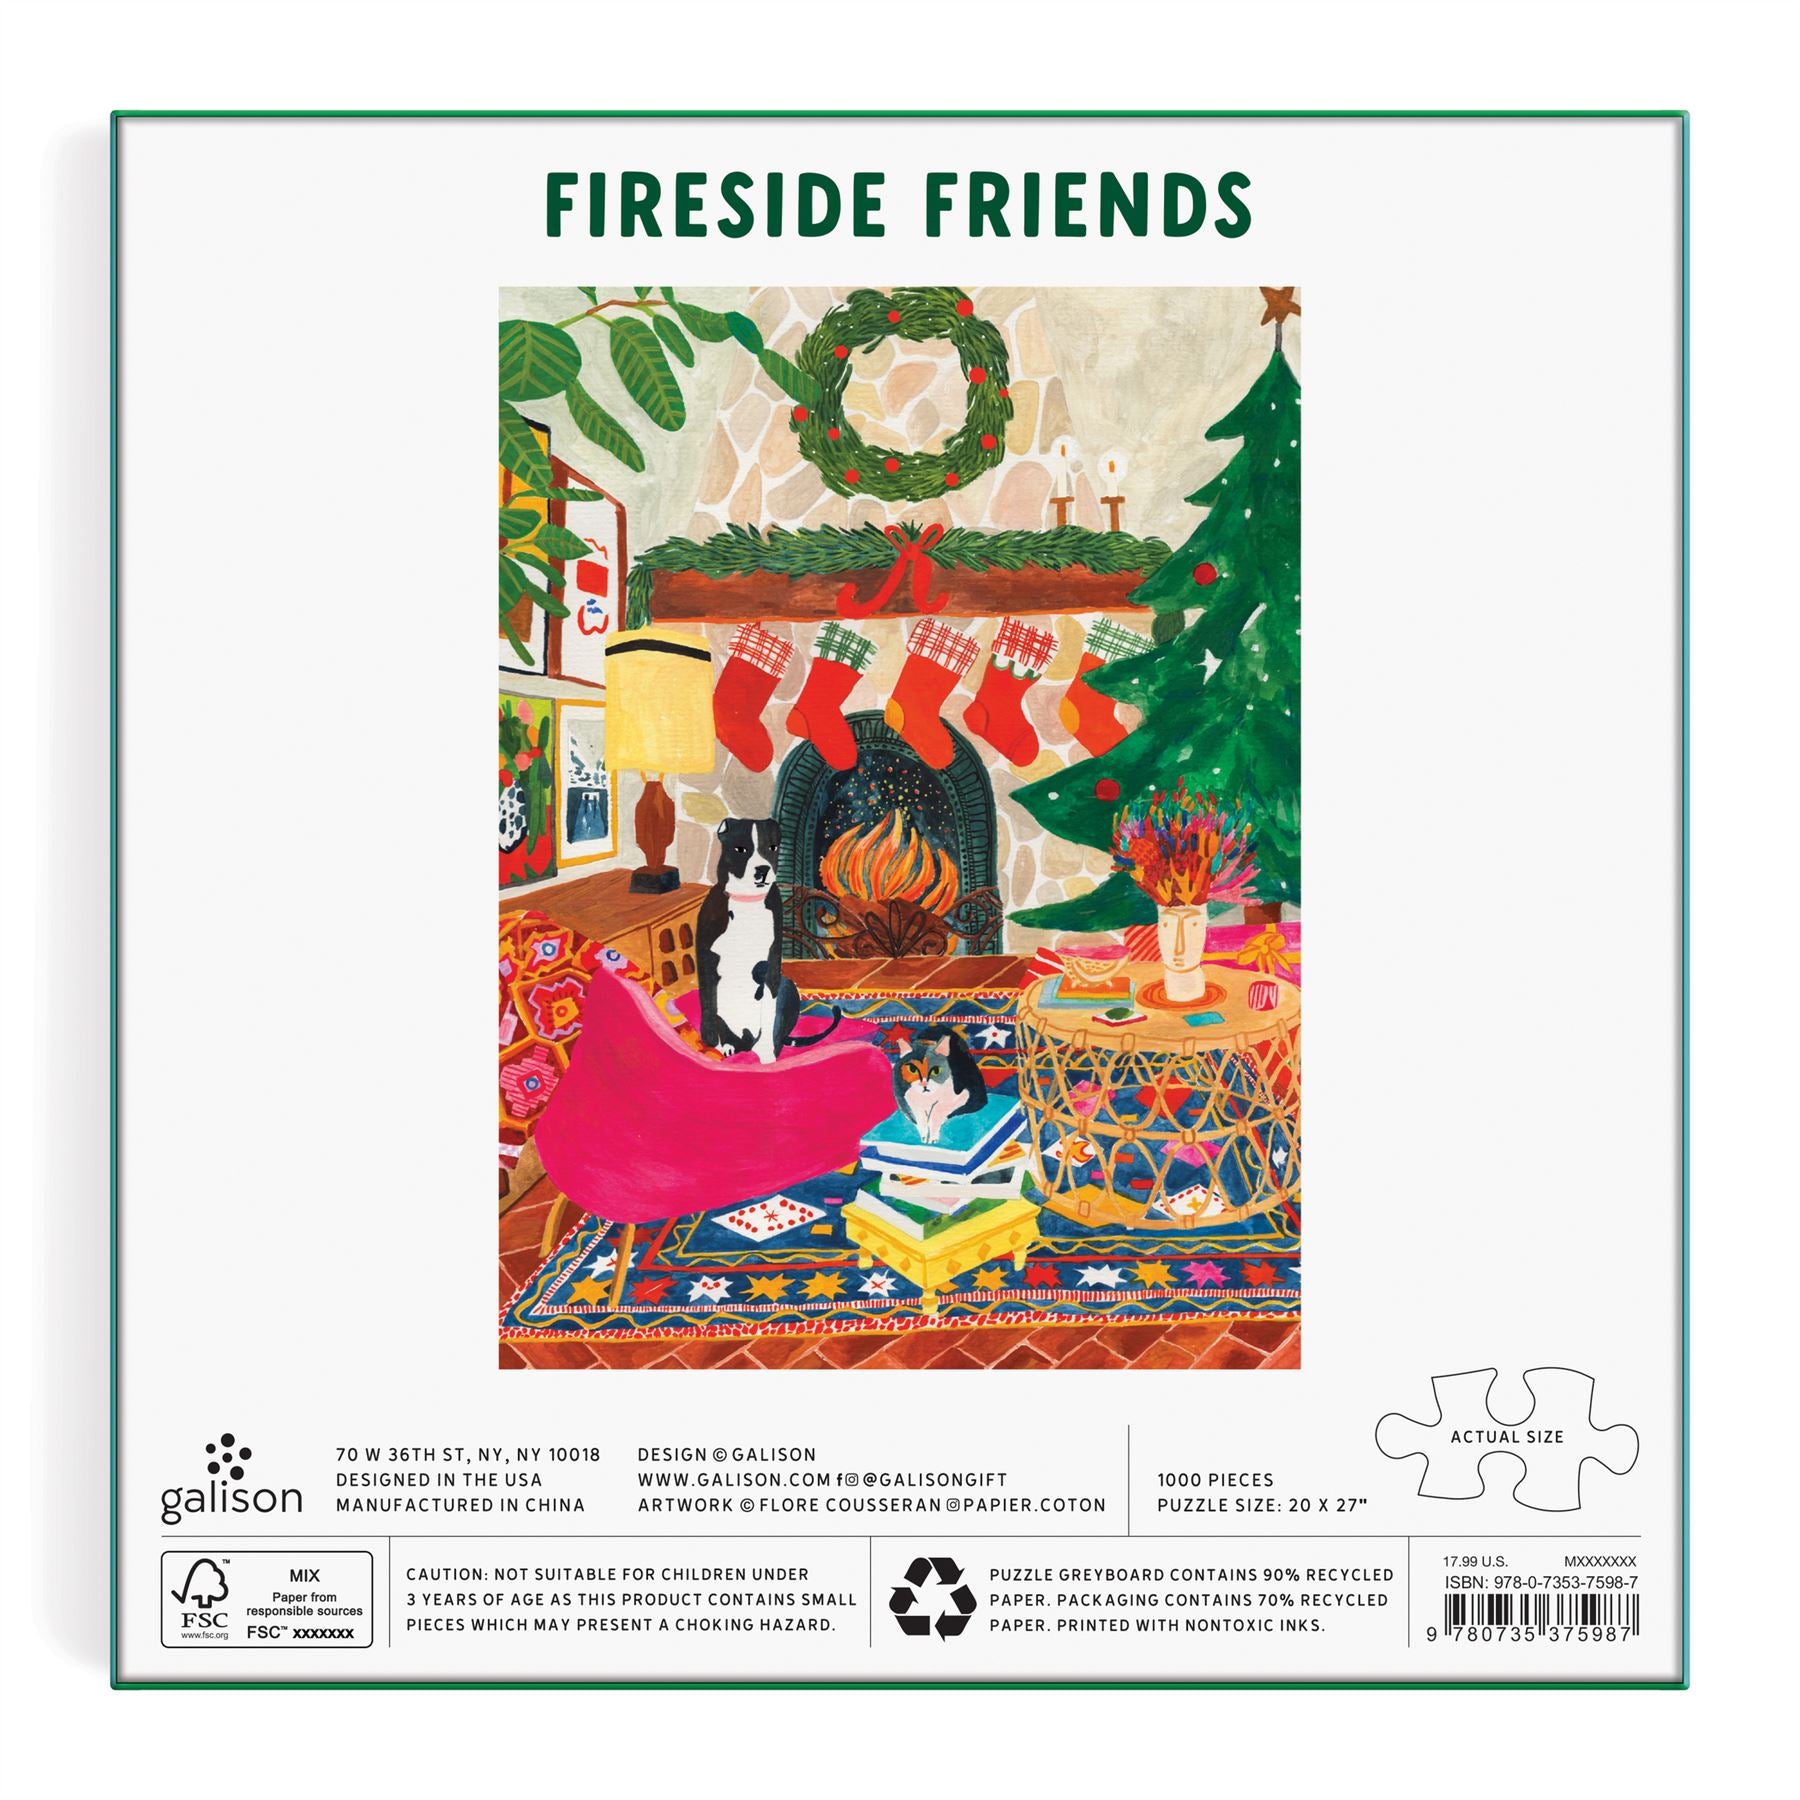 Fireside Friends 1000 Piece Jigsaw Puzzle box back